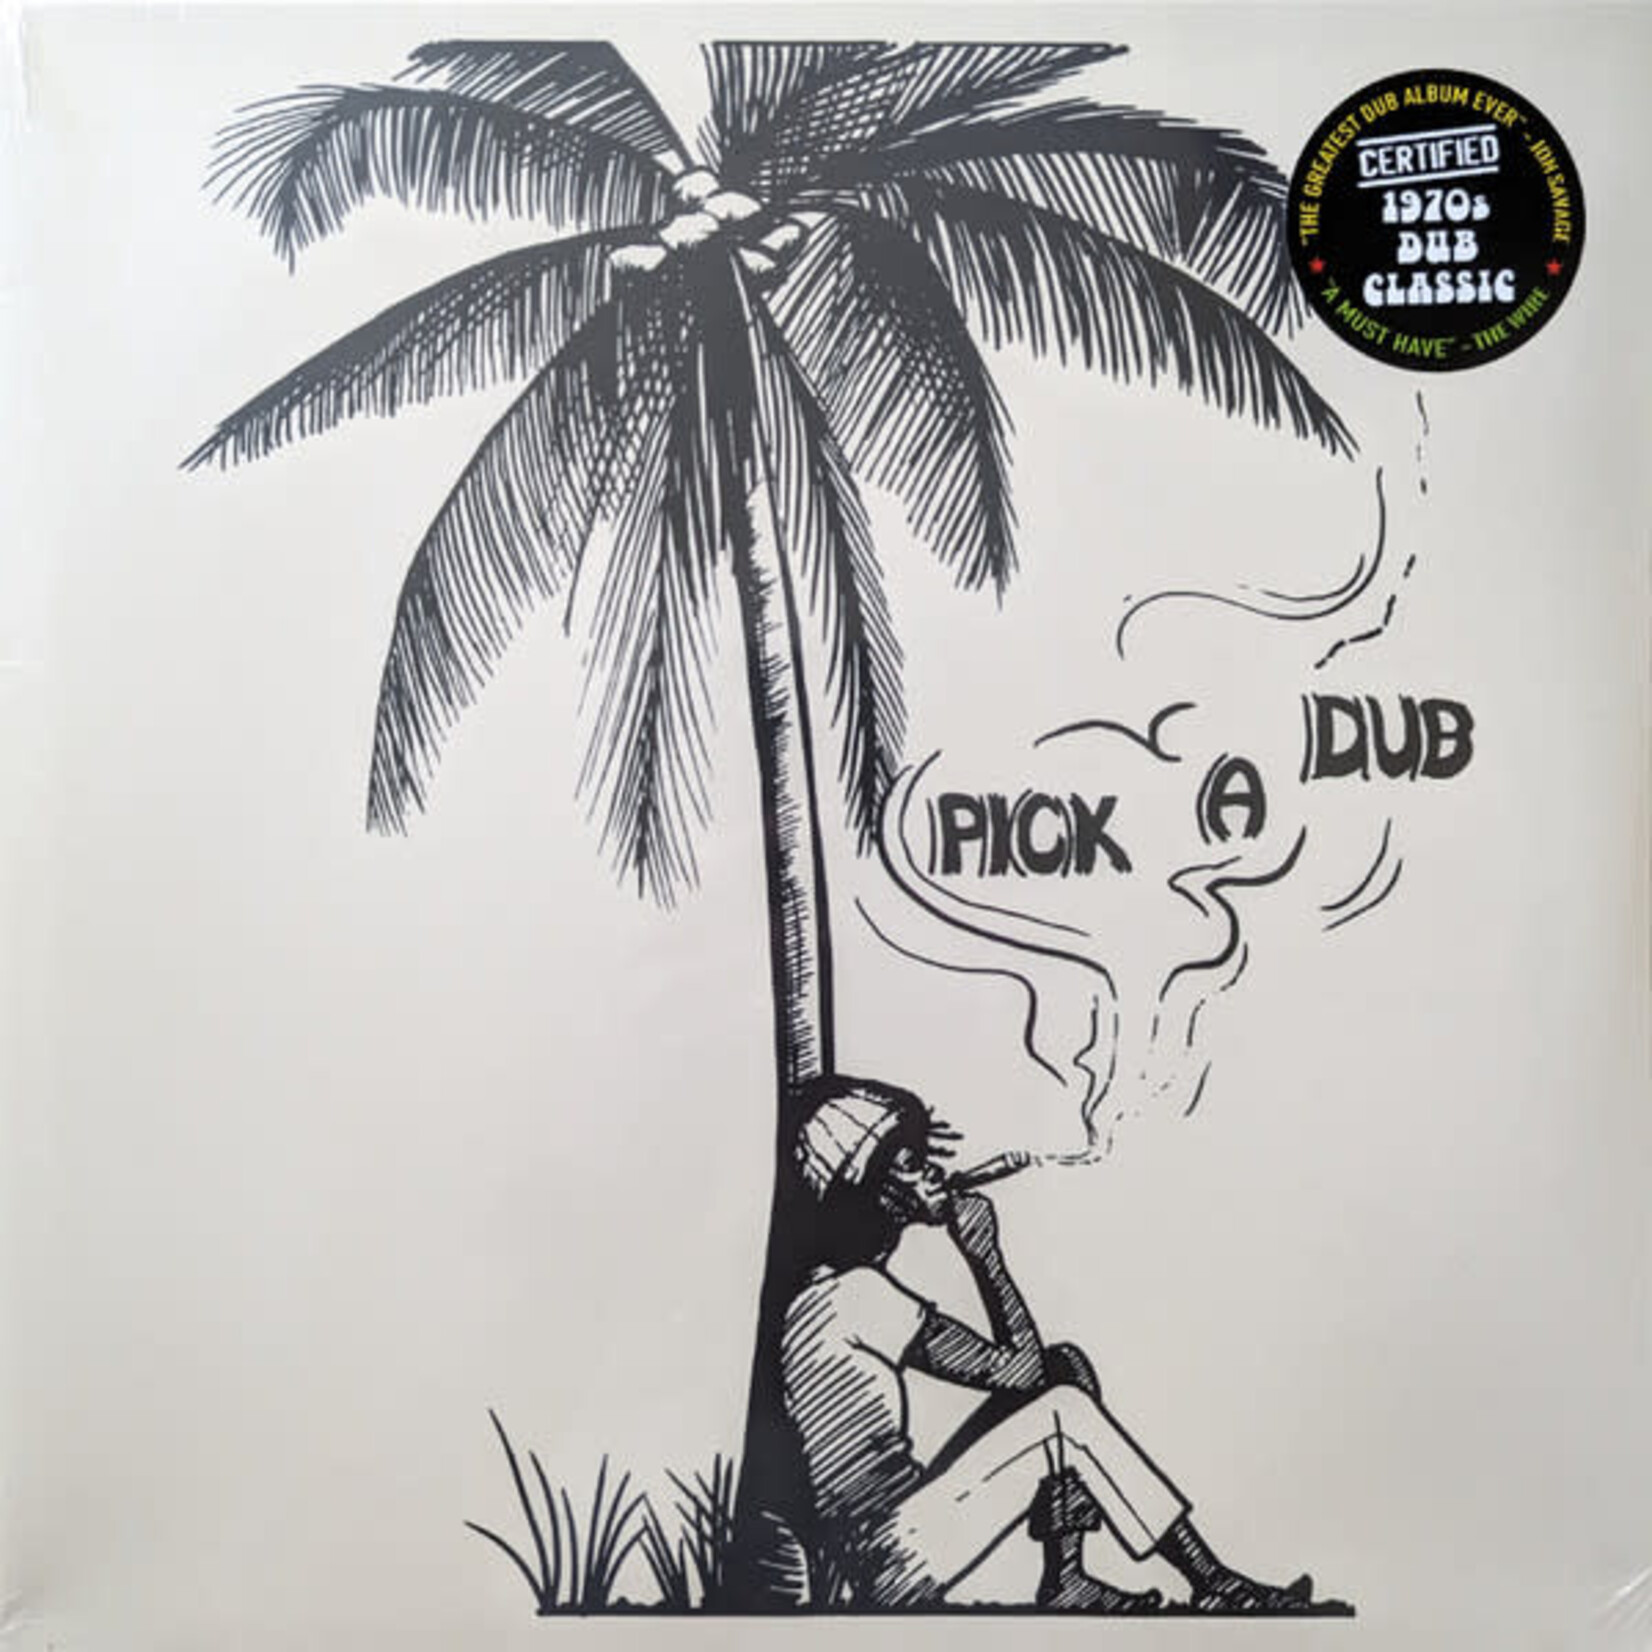 [New] Keith Hudson - Pick A Dub